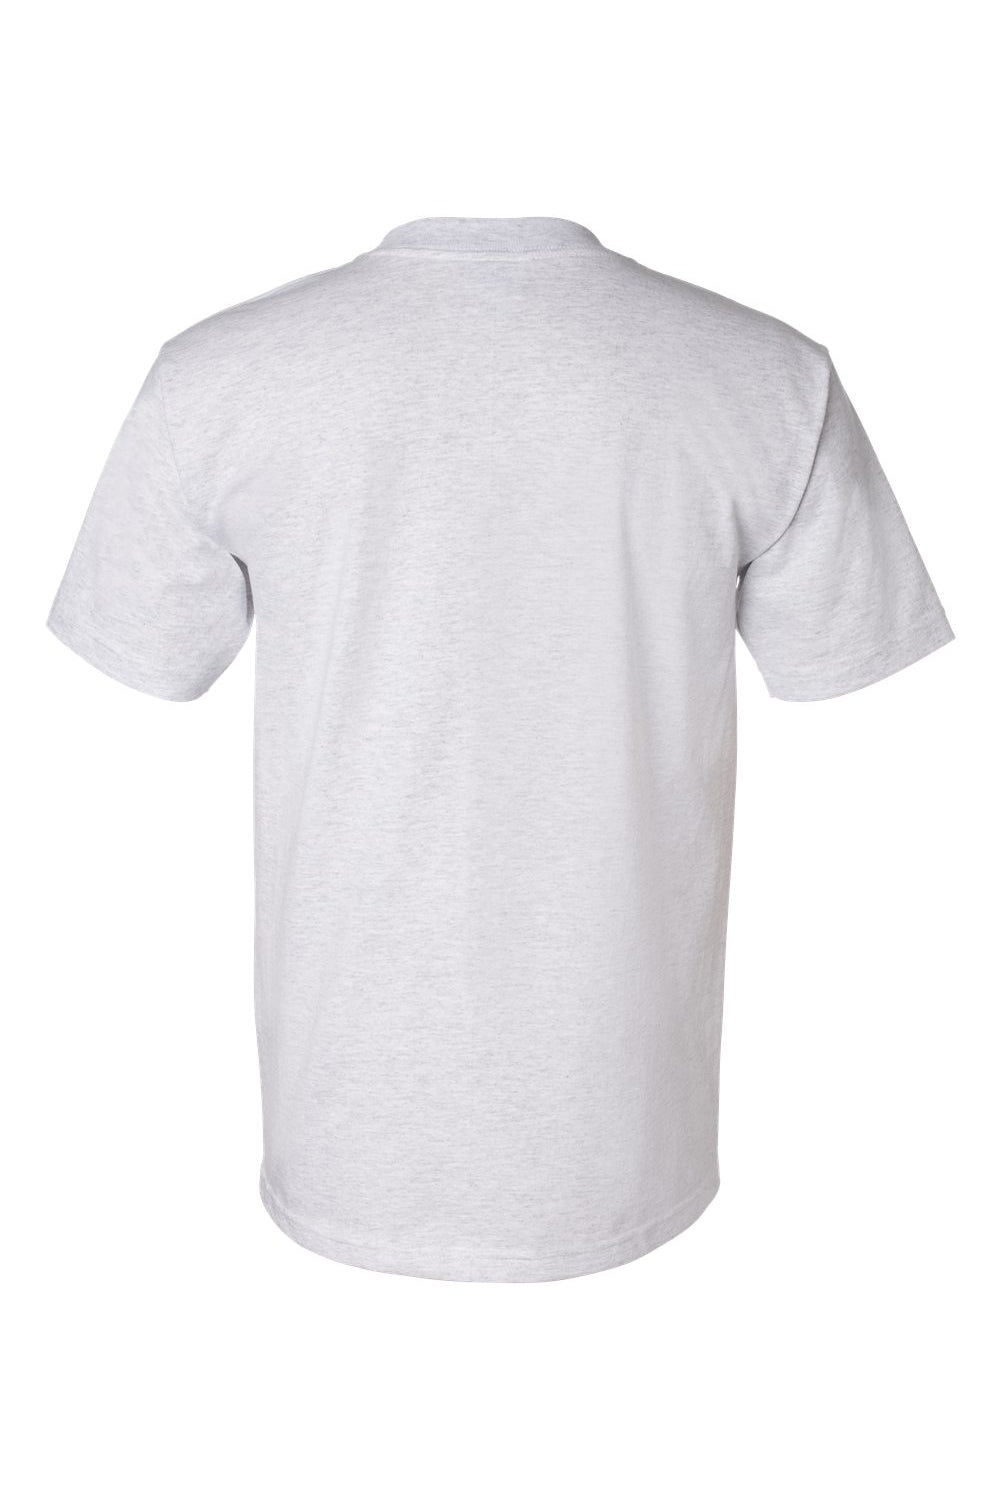 Bayside BA5100 Mens USA Made Short Sleeve Crewneck T-Shirt Ash Grey Flat Back